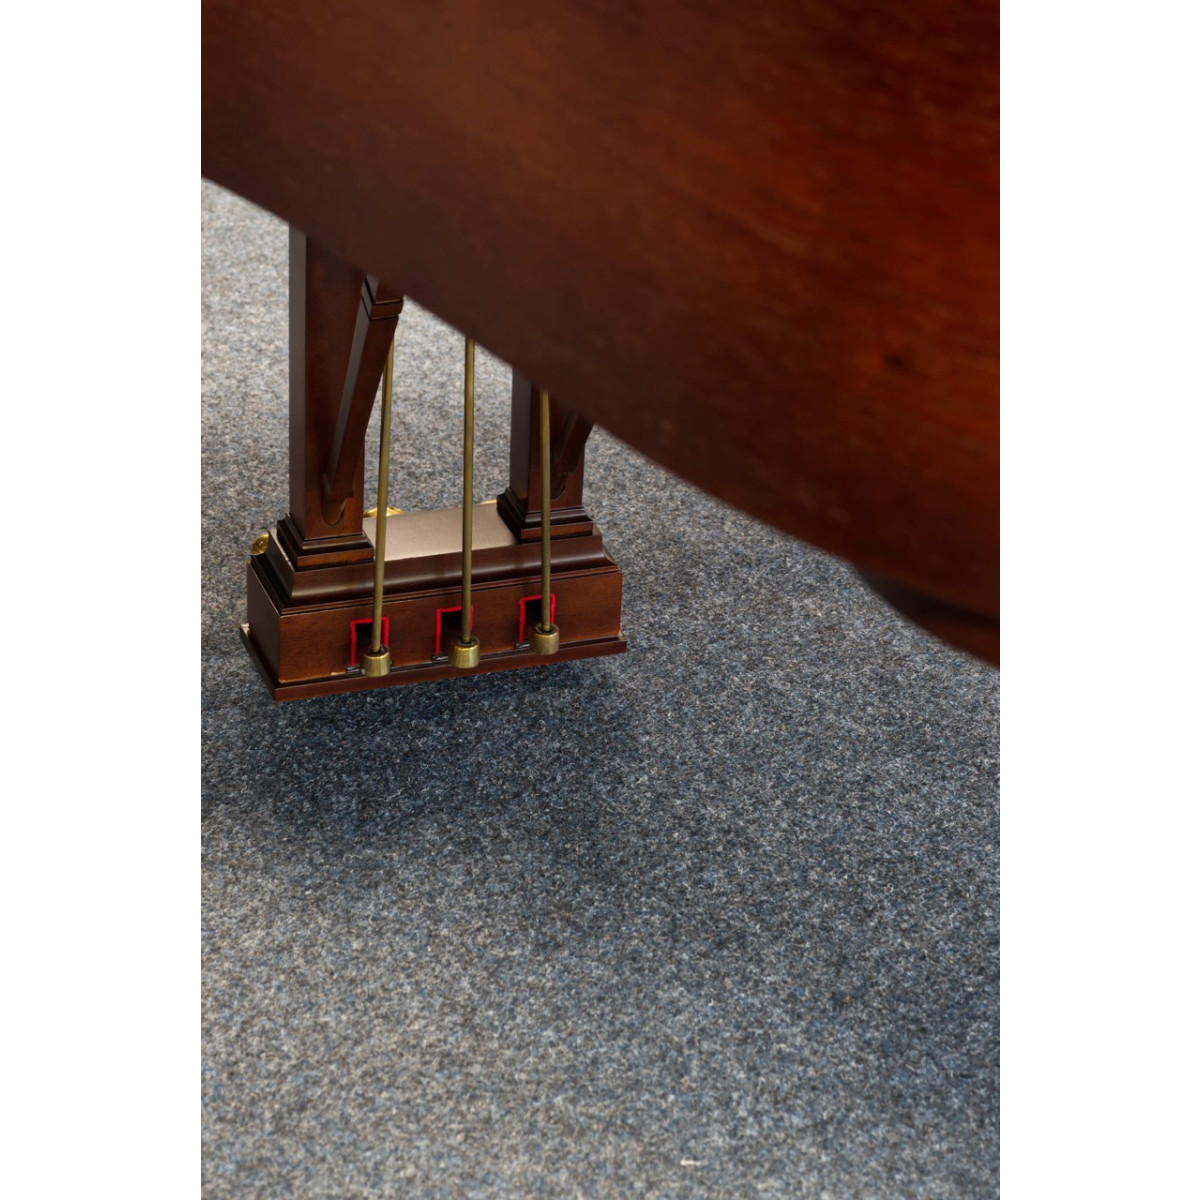 Steinway & Sons Flügel, M-170, Mahagoni, Ansicht: Detail, Pedale